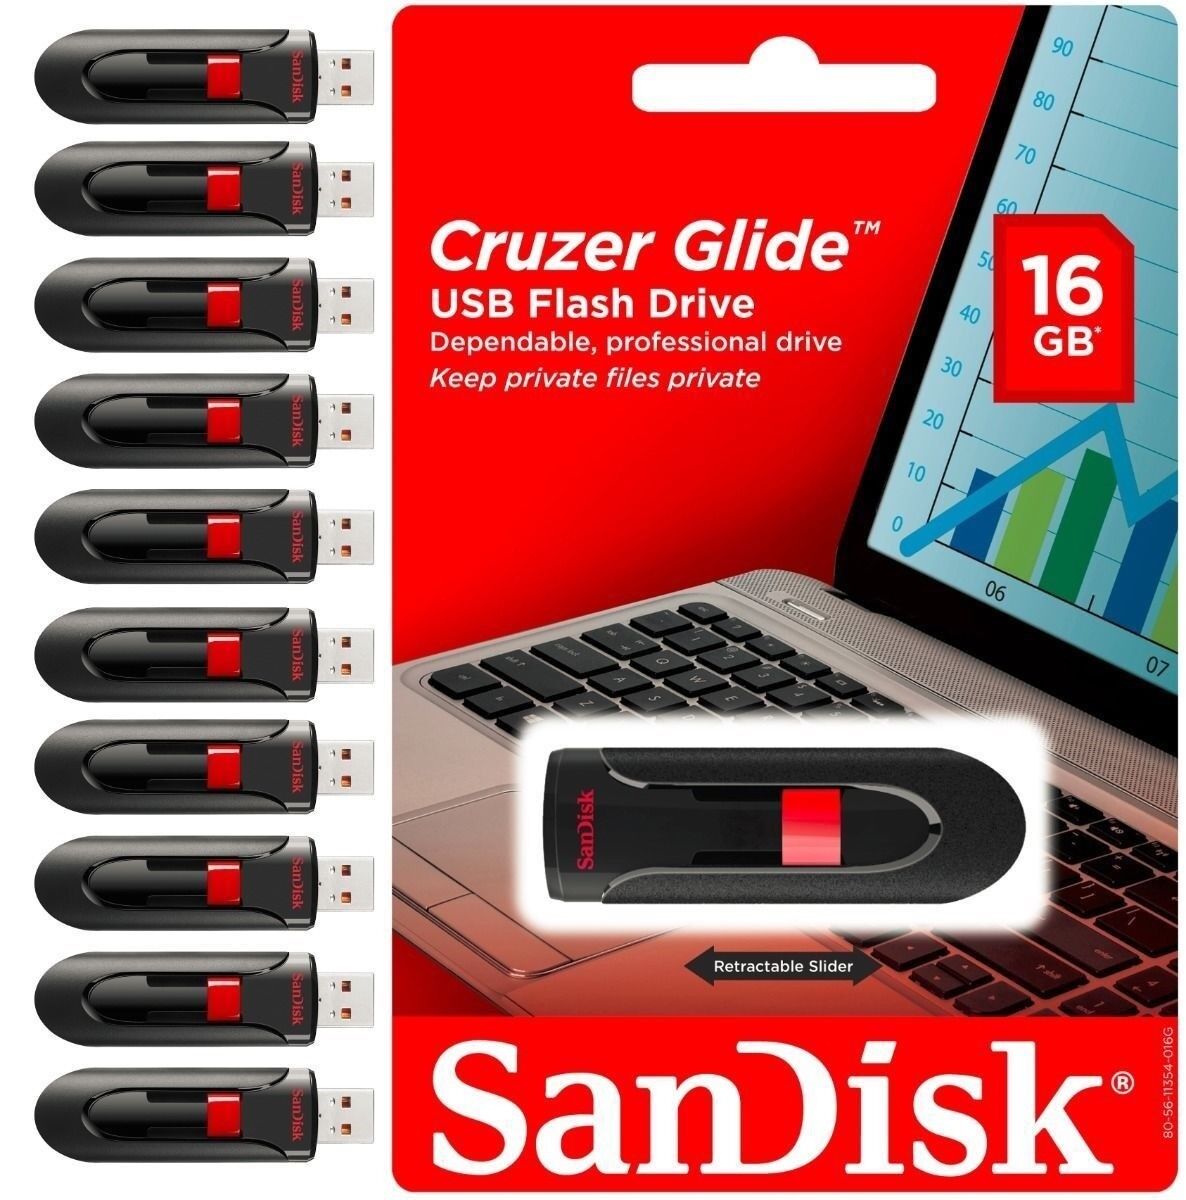 SanDisk 16GB USB 3.0 Flash Drive Memory Stick Thumb Drive Wholesale Lot 10 Pack SanDisk CRUZER